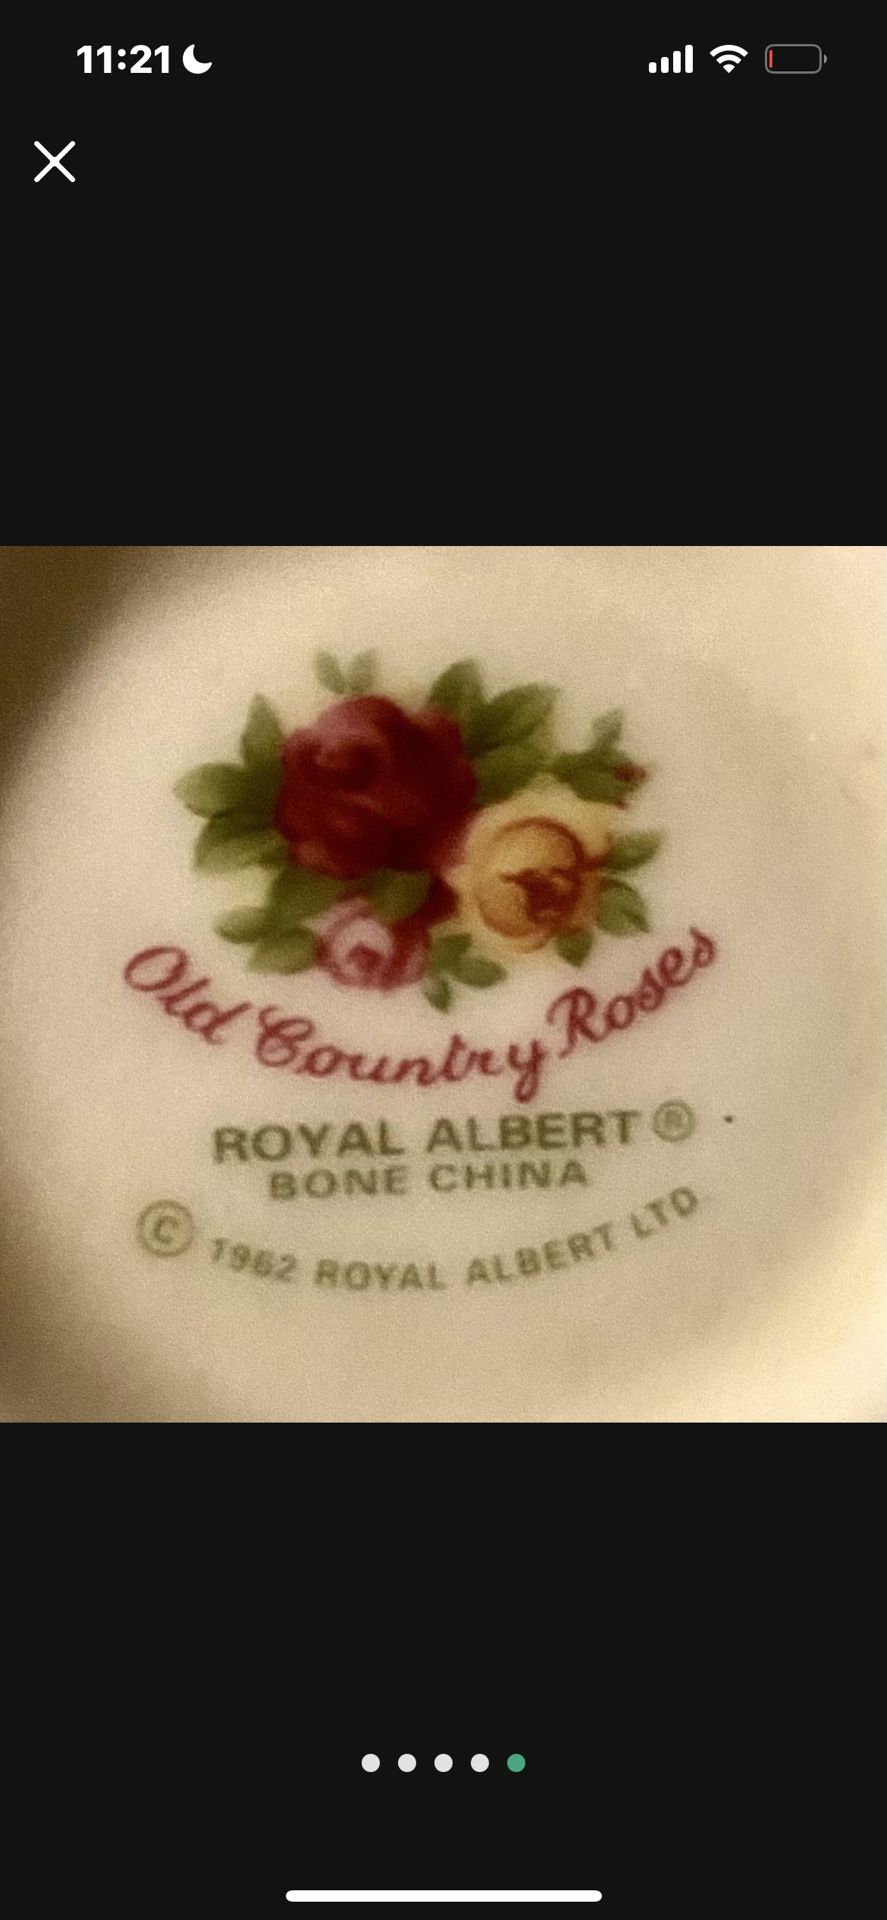 7 Piece Bone China 1962 made in England